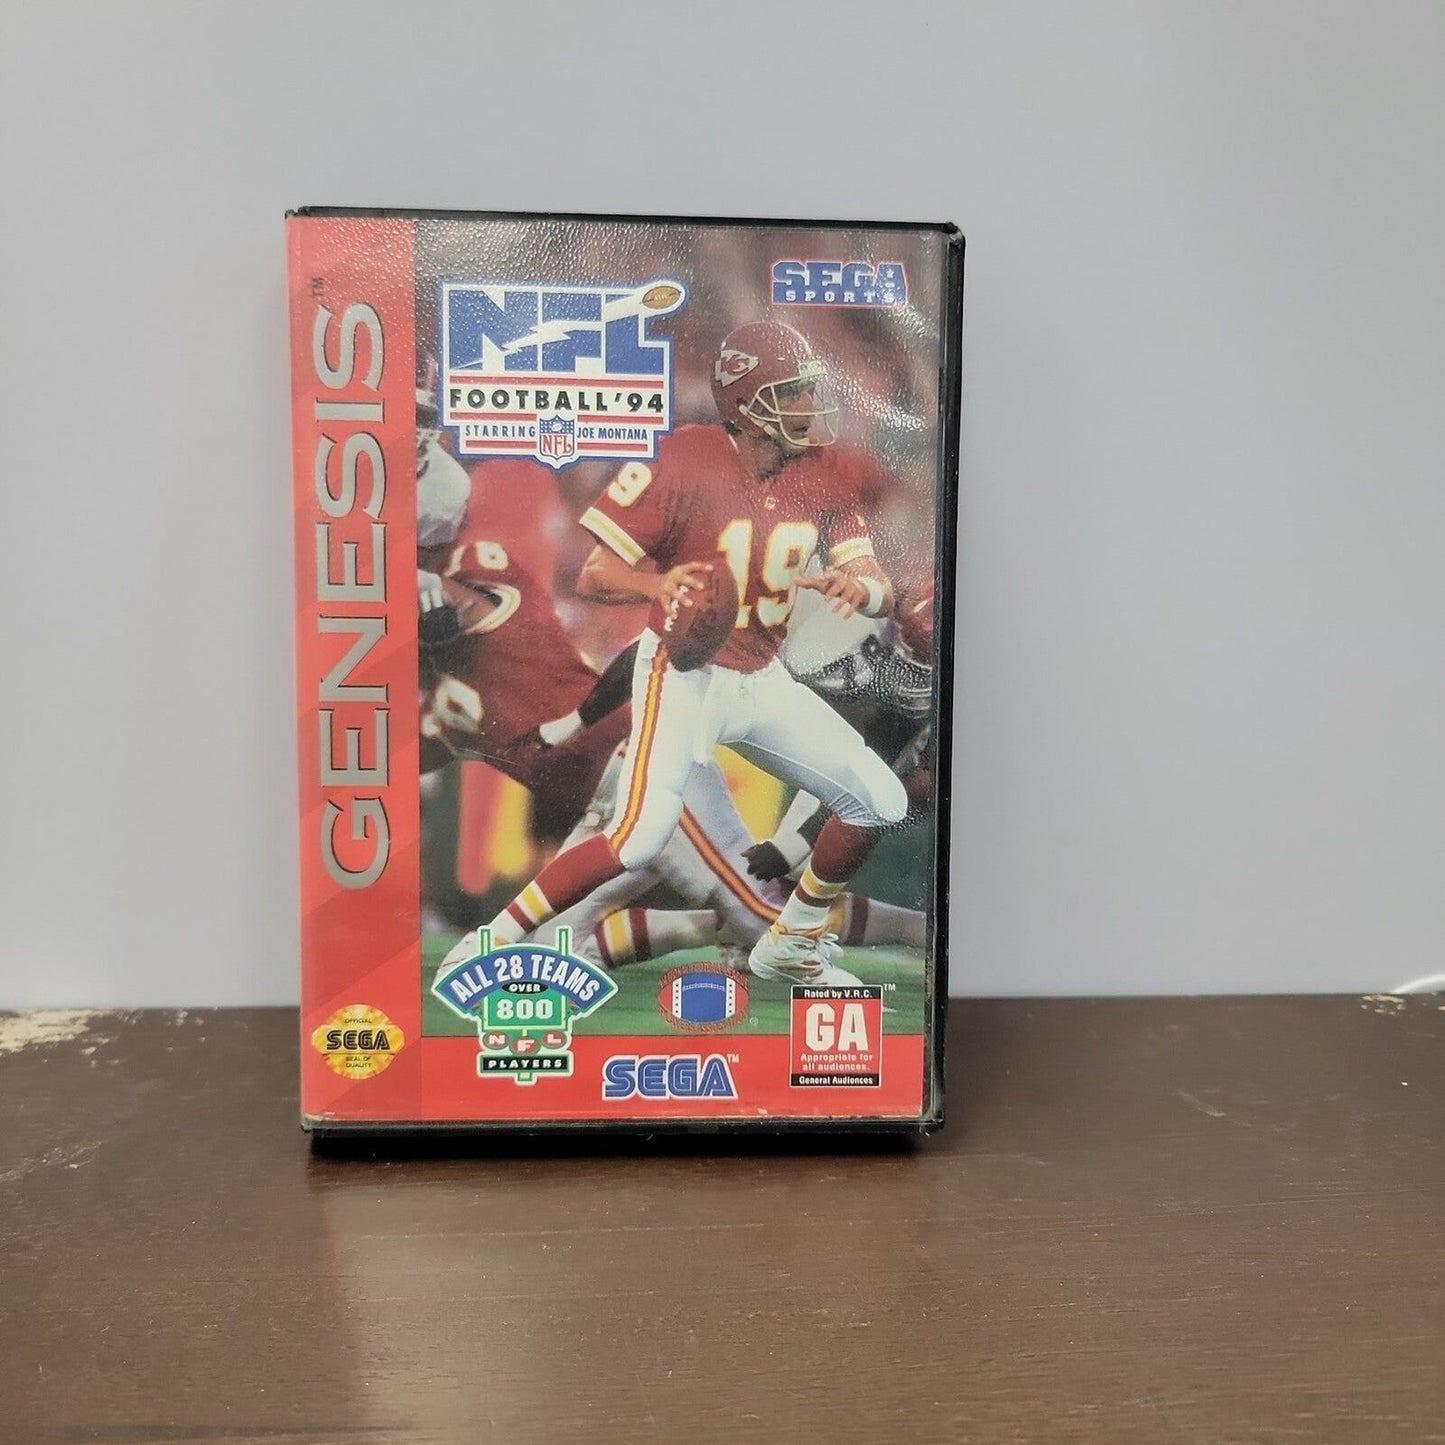 NFL Football '94 Starring Joe Montana Sega Genesis Game